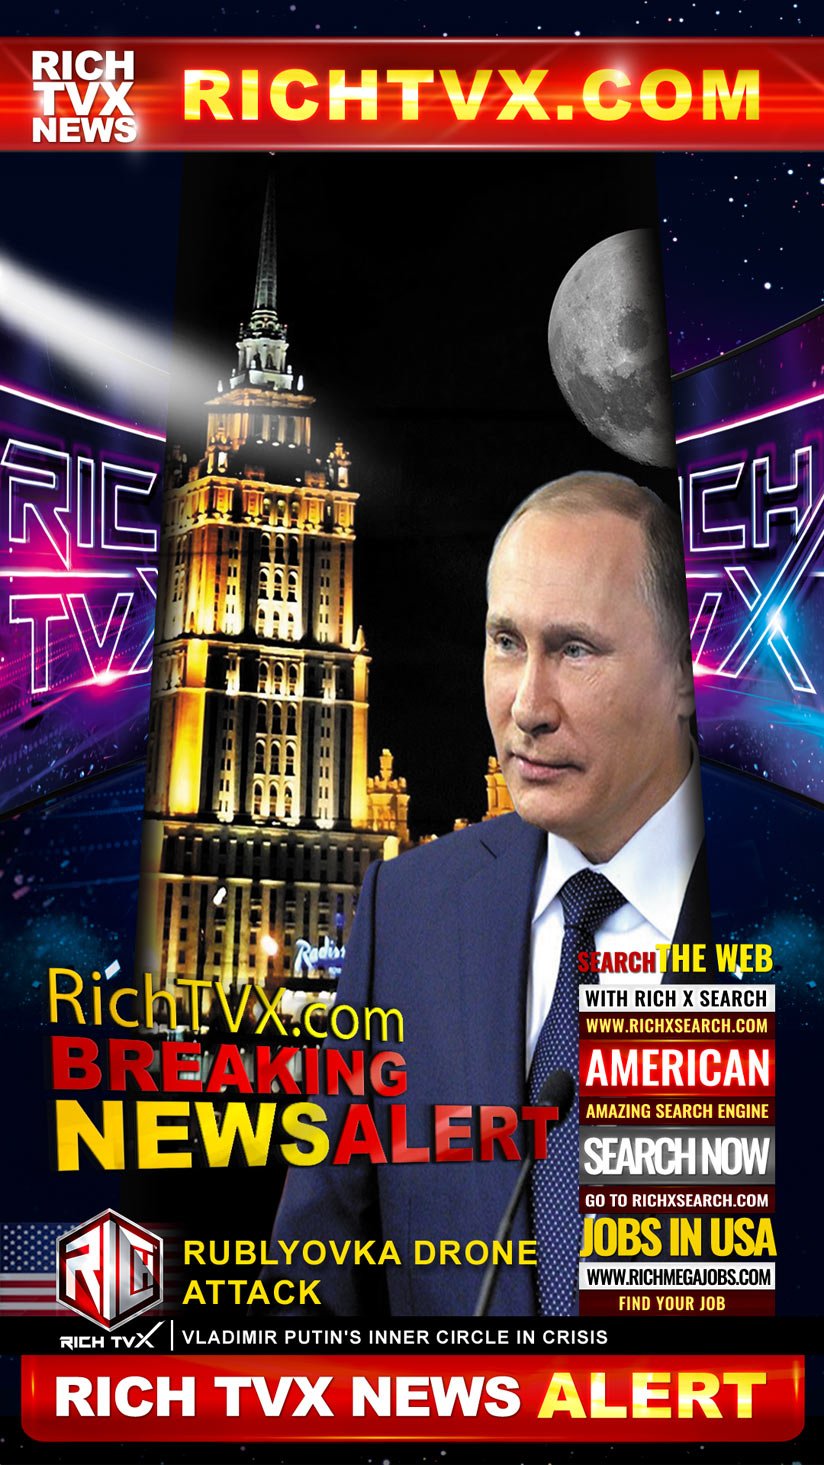 Rublyovka Drone Attack: Vladimir Putin’s Inner Circle in Crisis